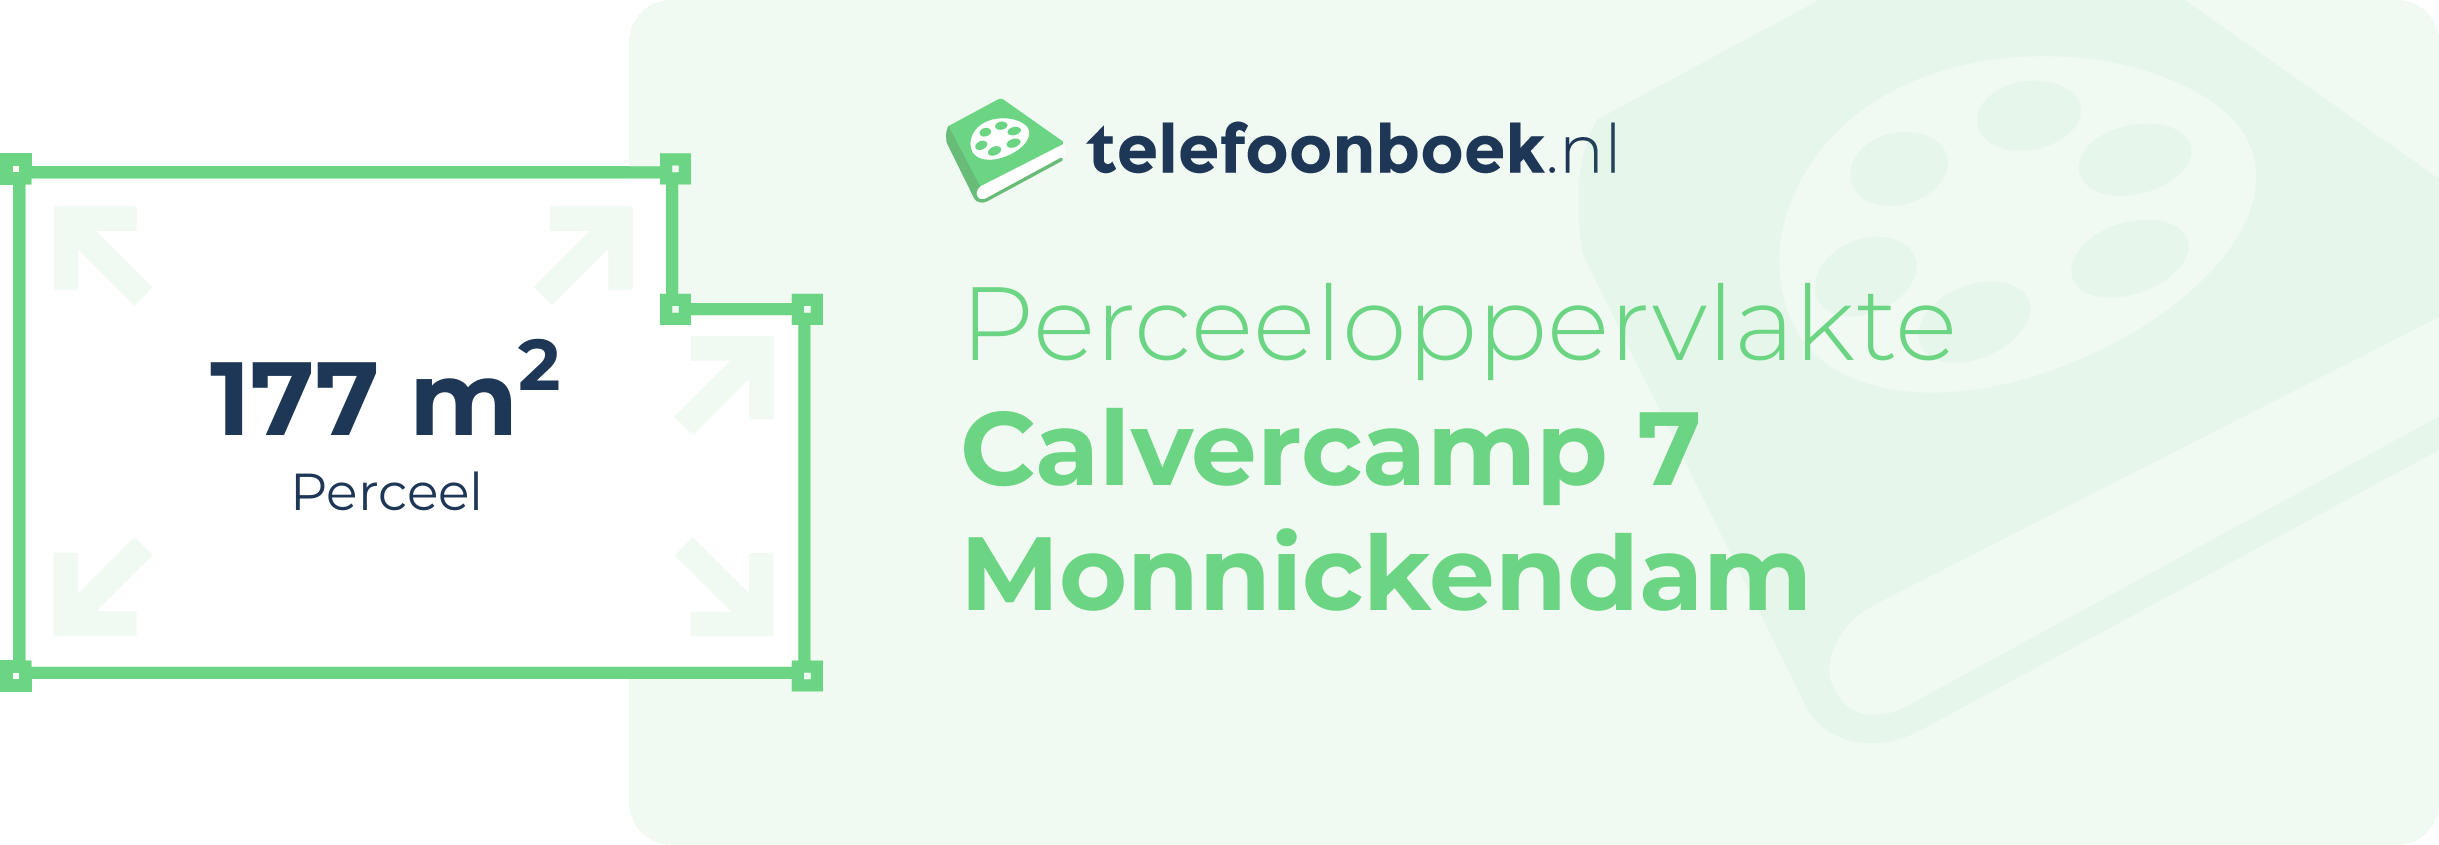 Perceeloppervlakte Calvercamp 7 Monnickendam